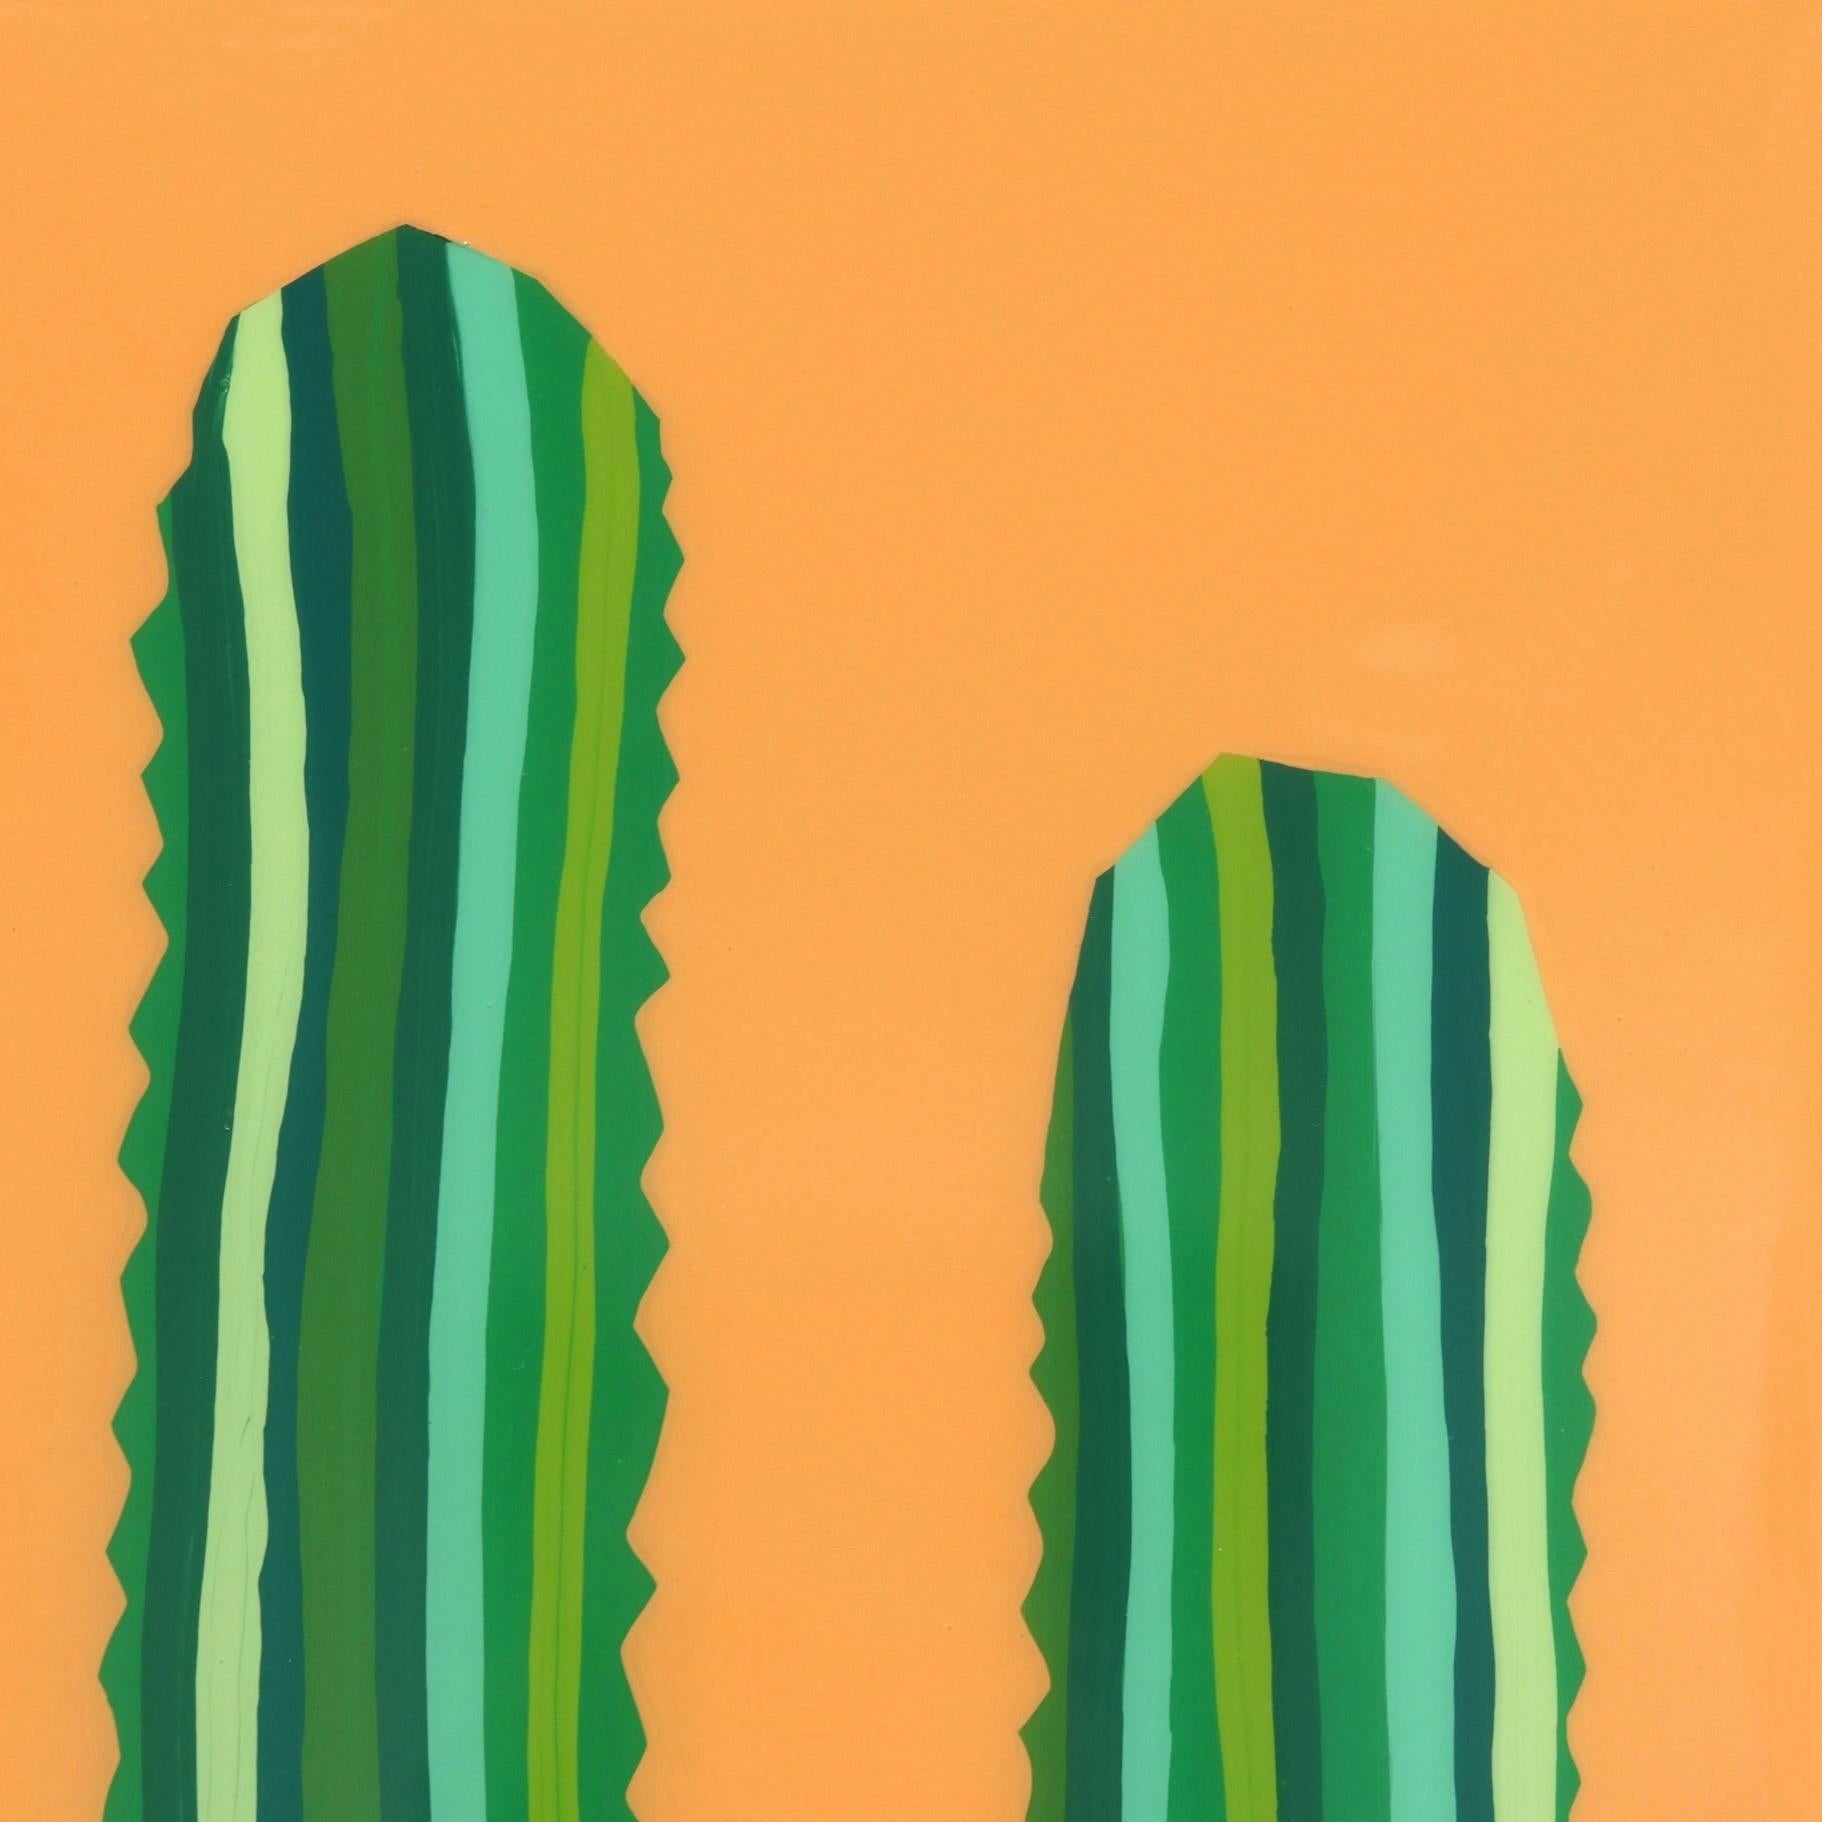 Velloso - Vibrant Orange Green Southwest Inspired Pop Art Cactus Painting For Sale 2